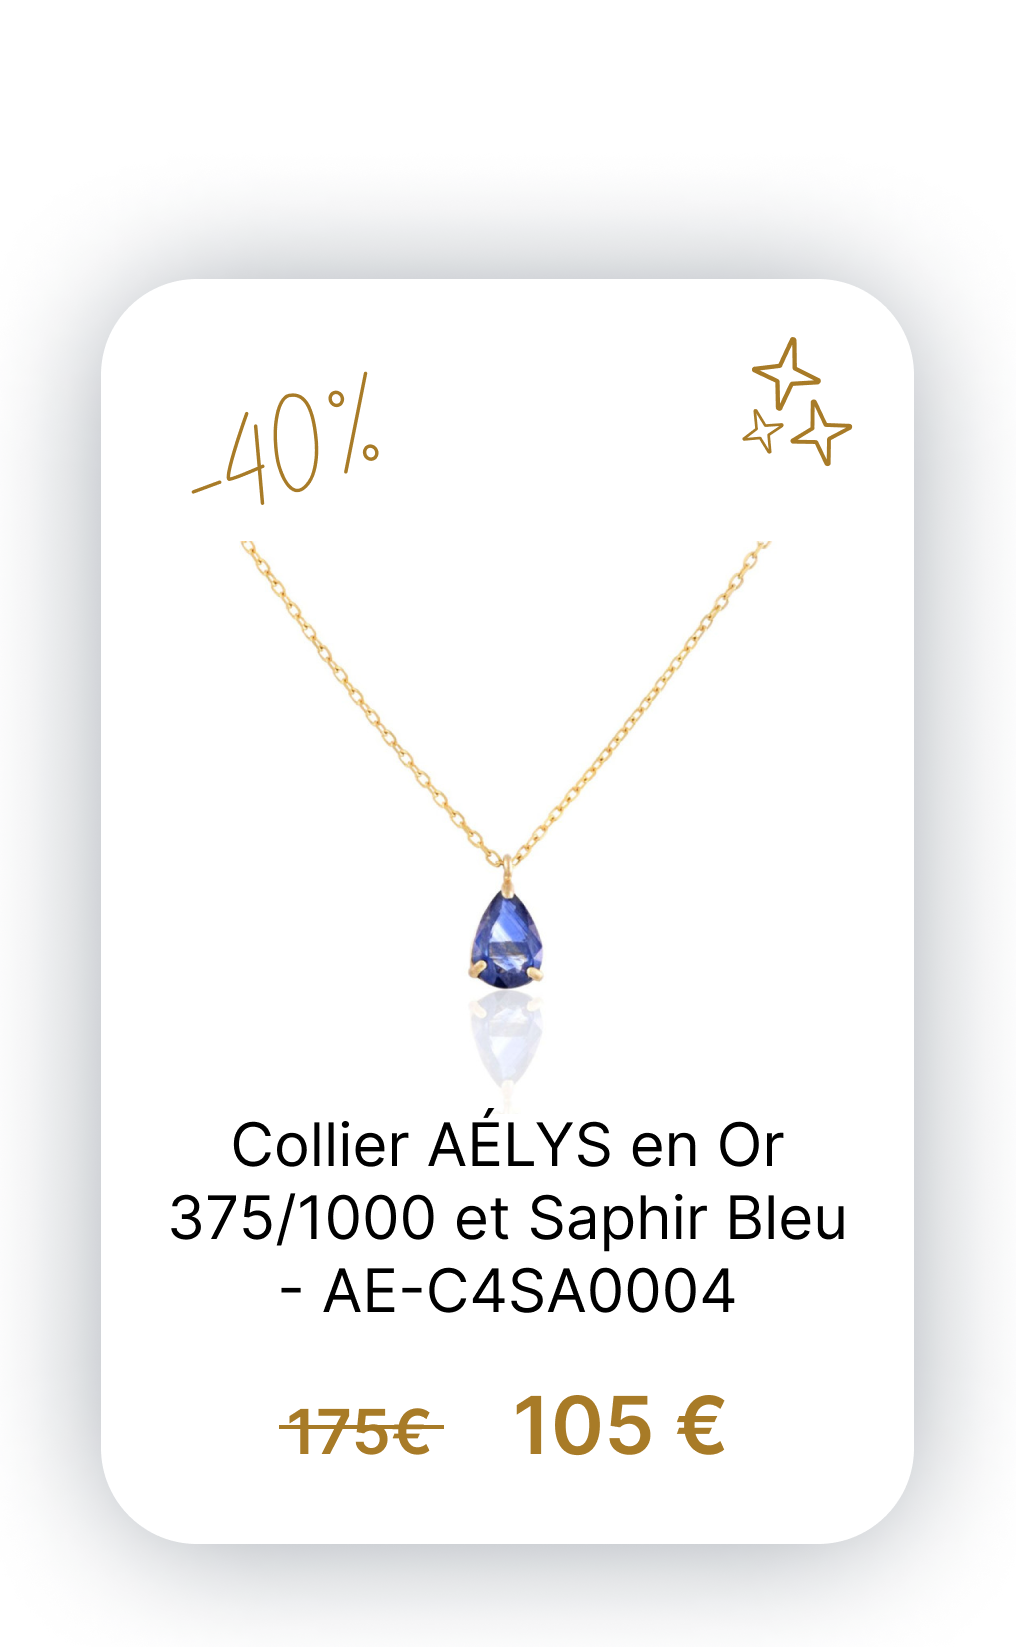 Collier AÉLYS en Or 3751000 et Saphir Bleu - AE-C4SA0004